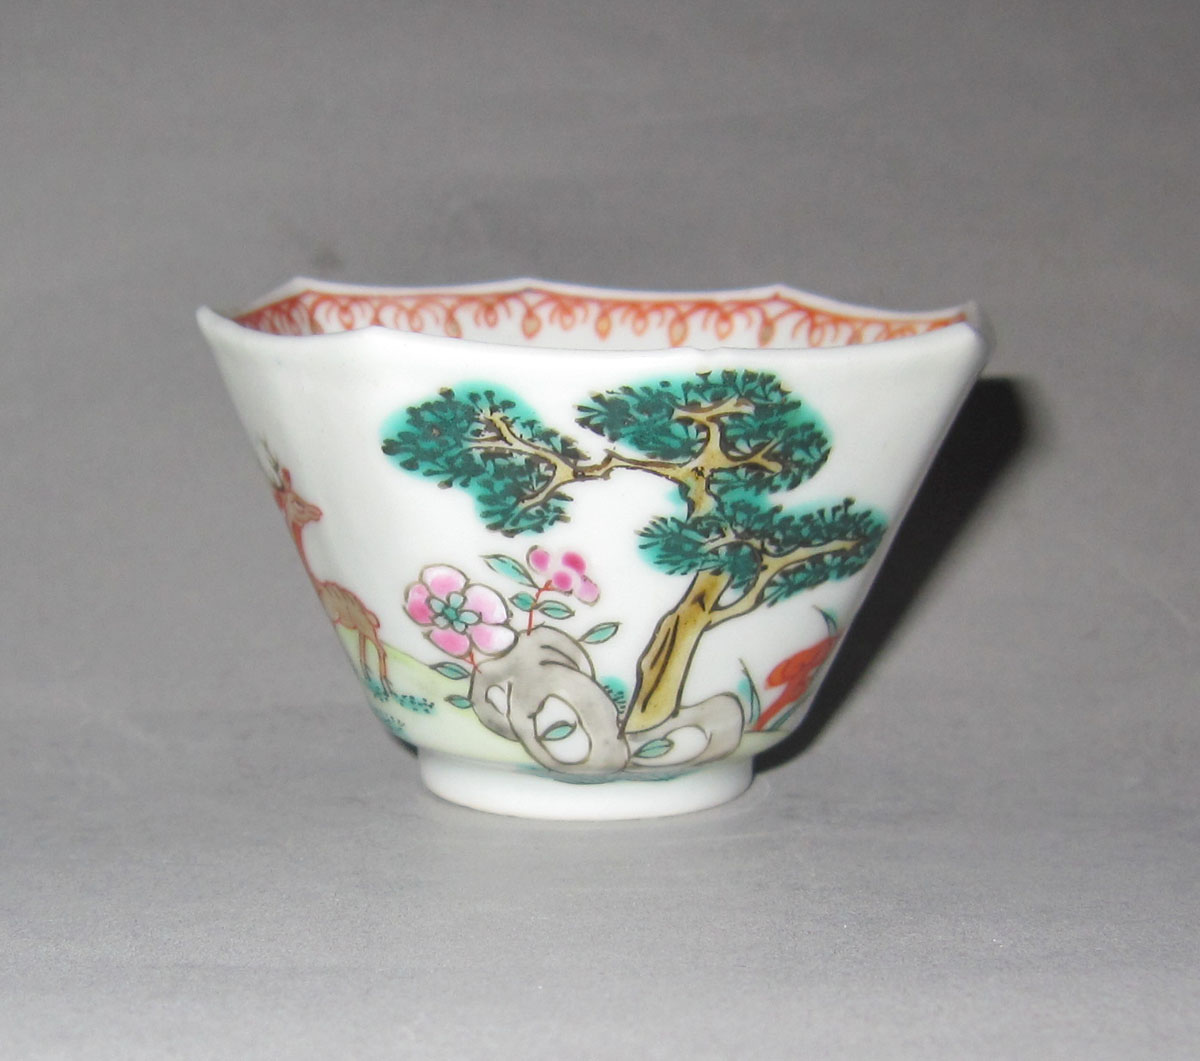 1953.0156.005 A Porcelain teacup